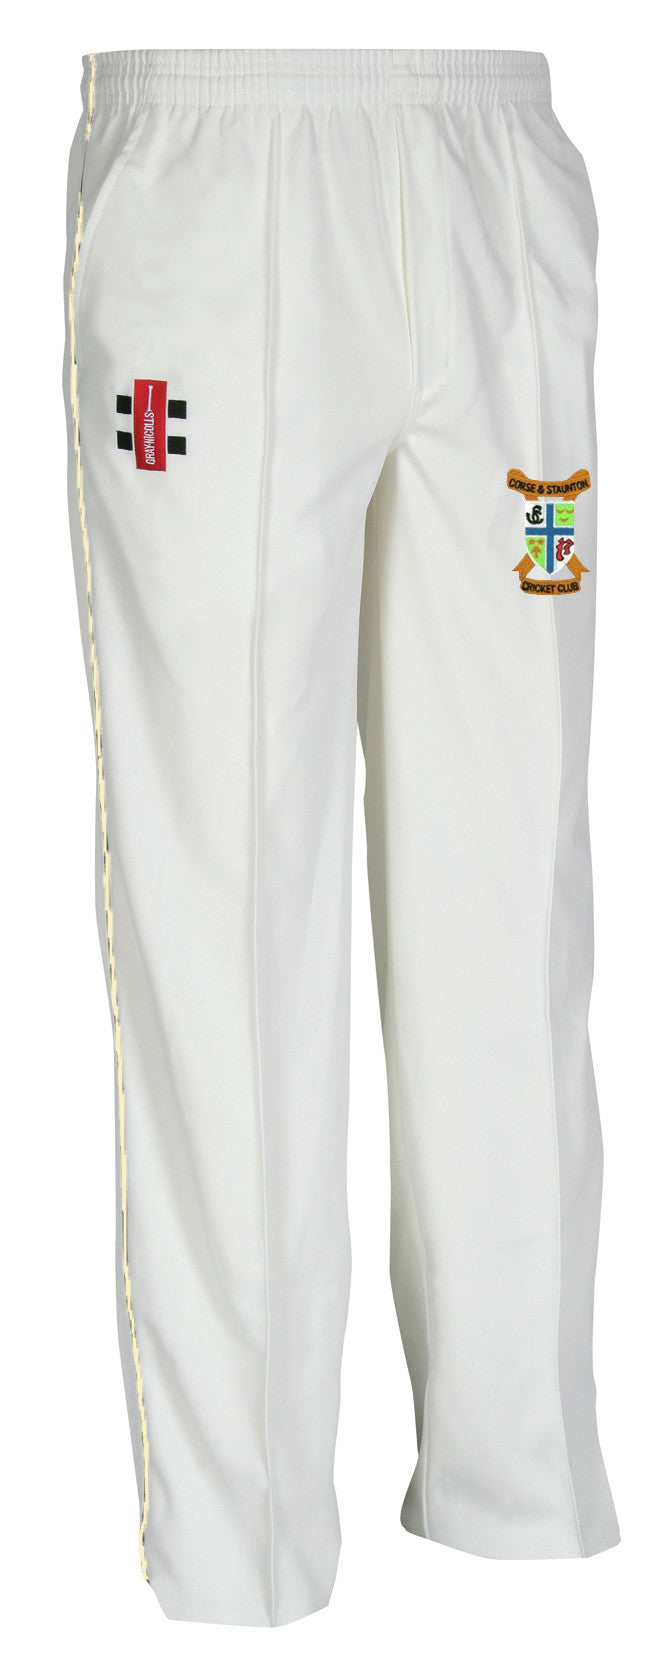 Corse & Staunton CC Matrix Cricket Trouser